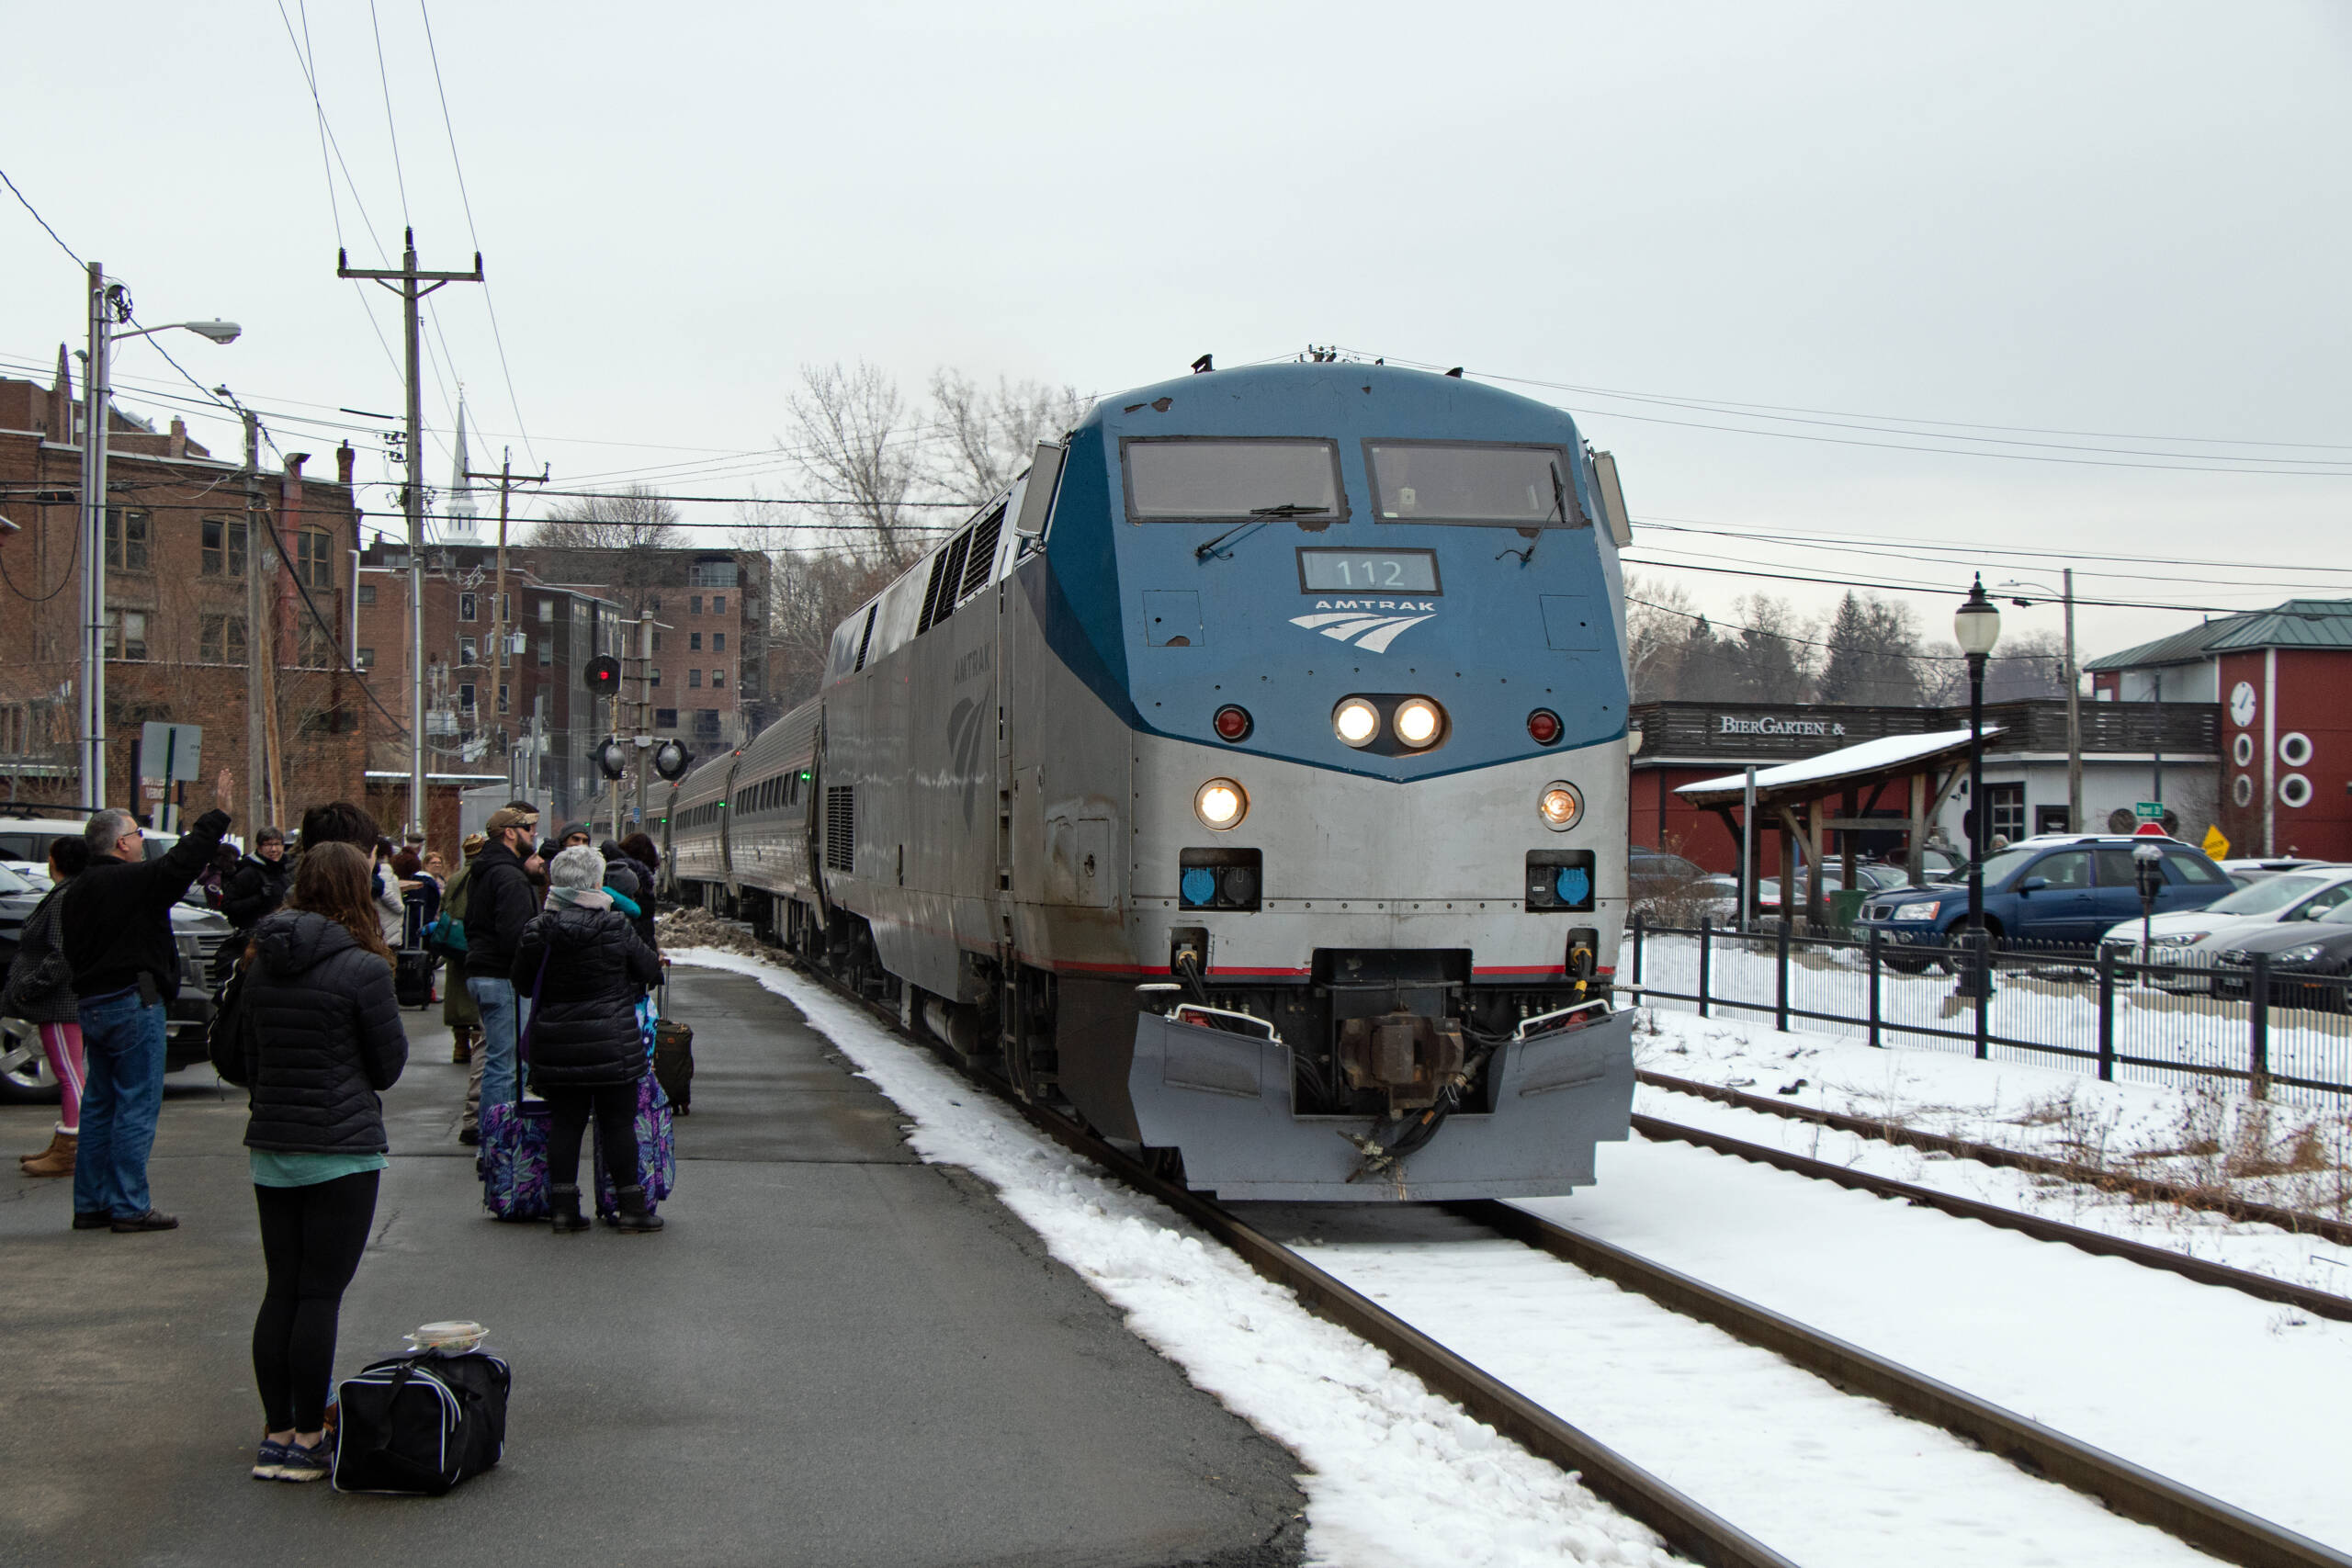 Blue and gray diesel locomotive and passenger train at station platform